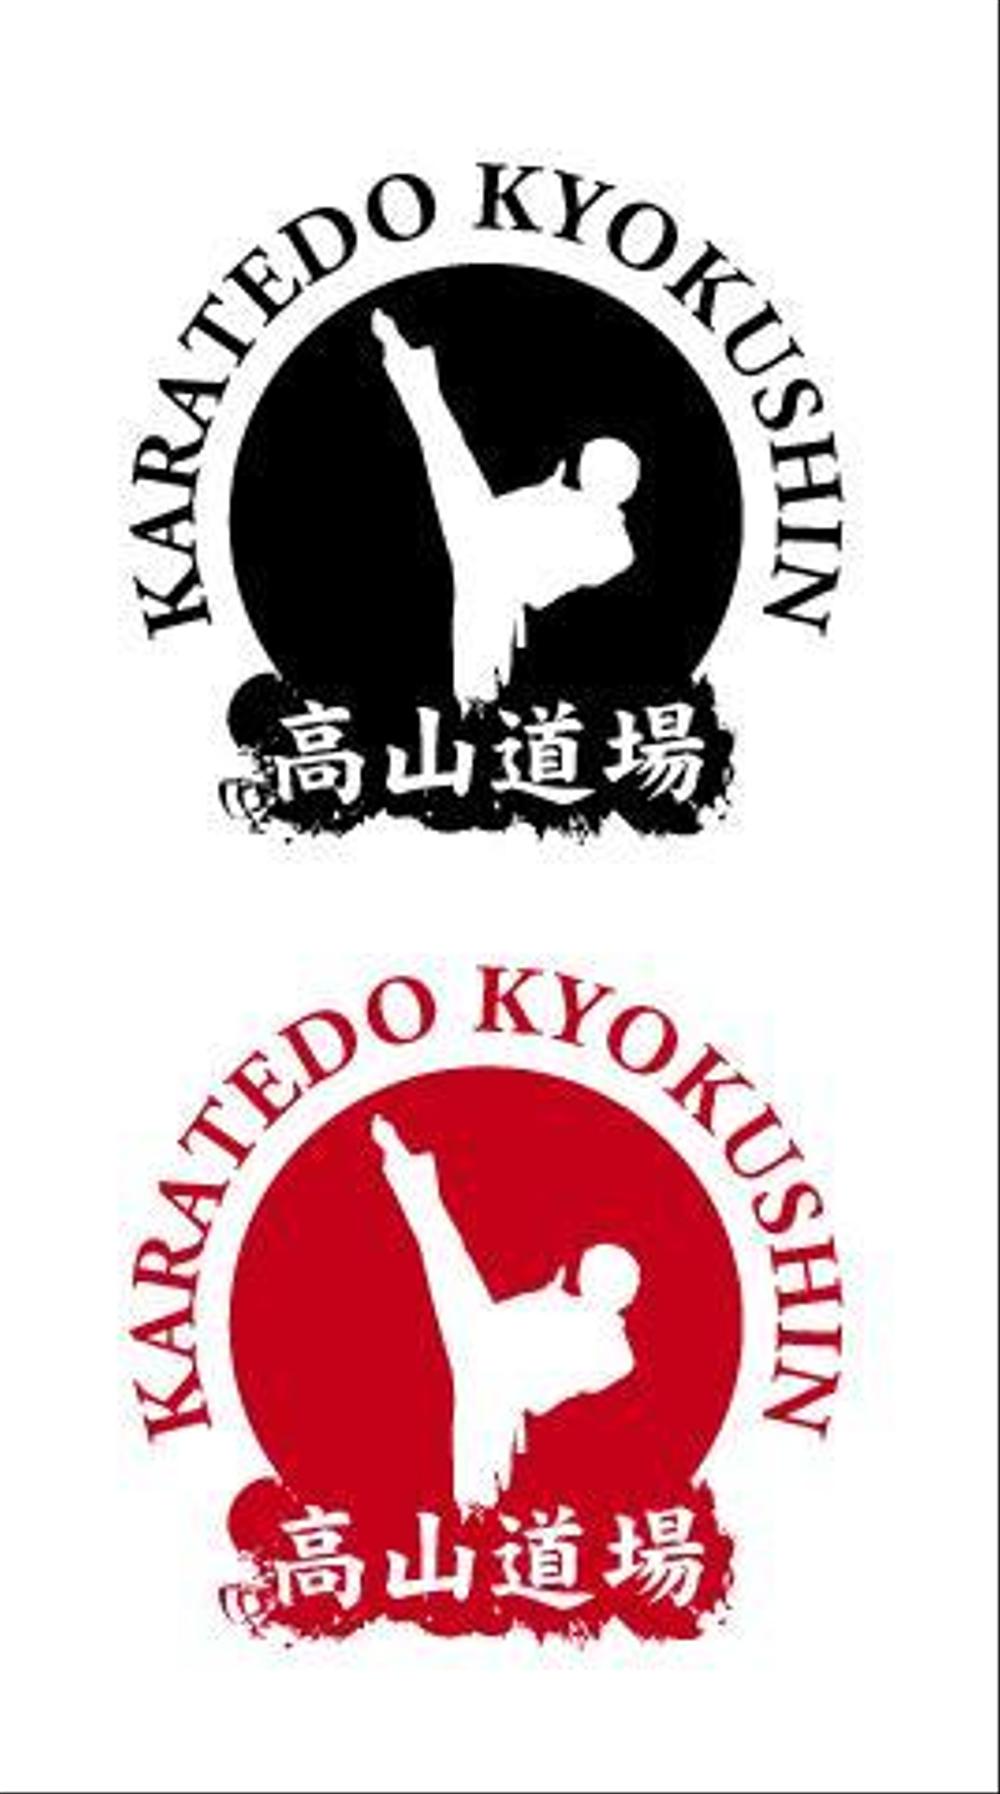 karatedotakayama2.jpg